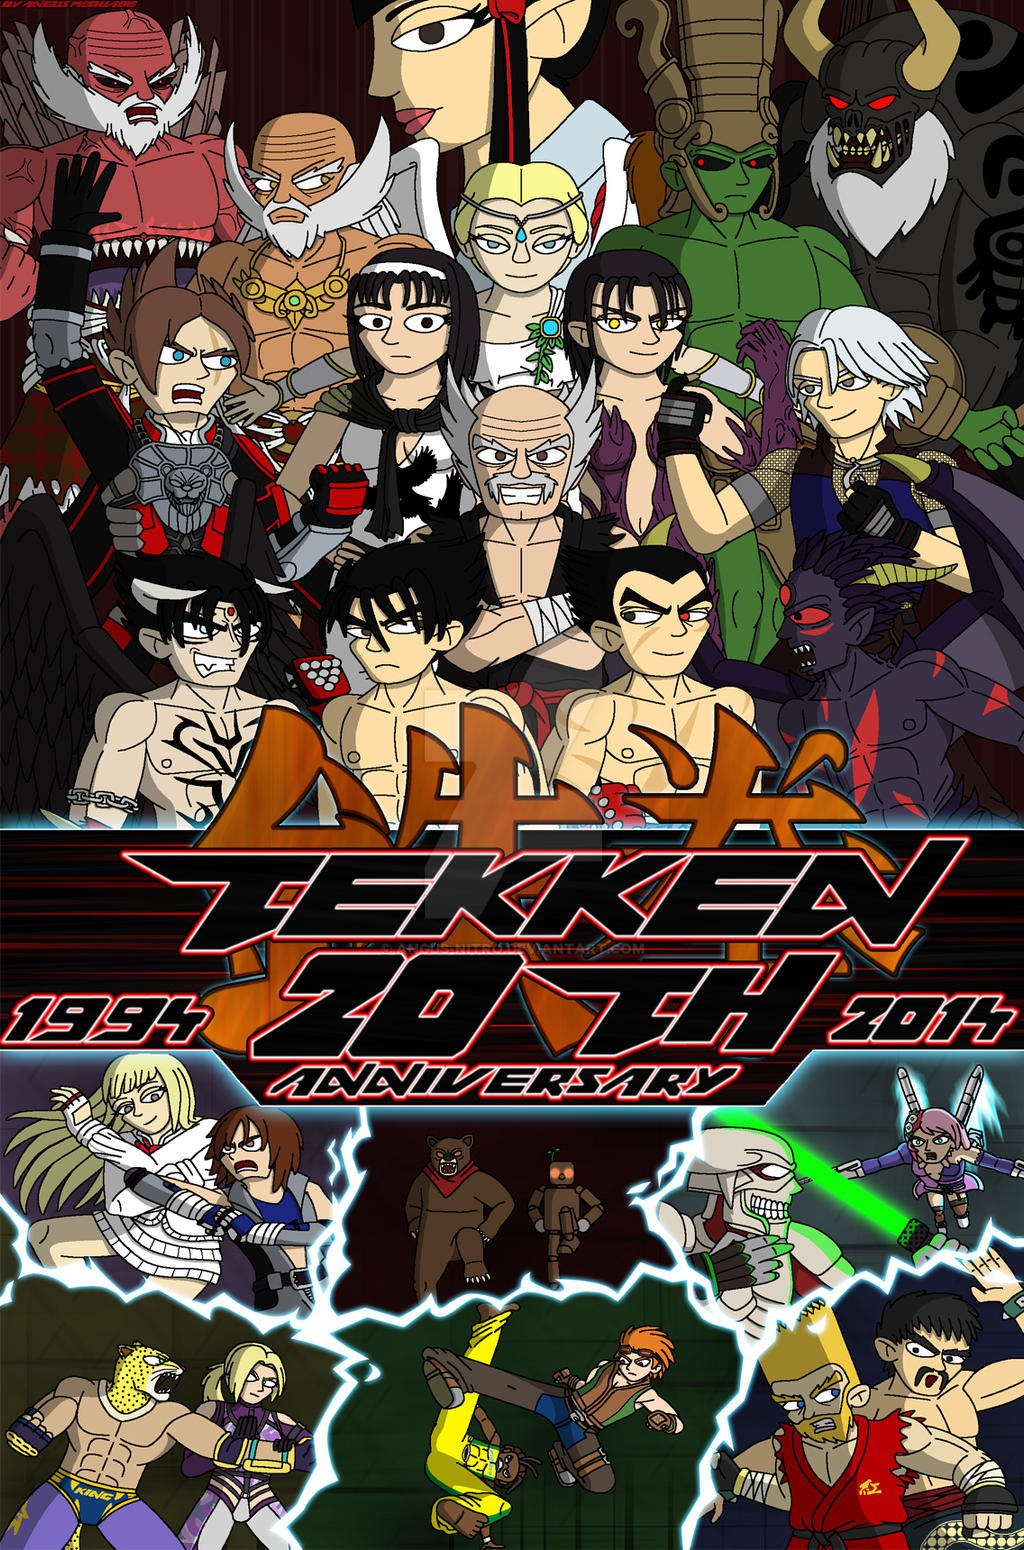 TEKKEN 2 - Iron Fist Tournament 2 Group Picture by Hyde209 on DeviantArt